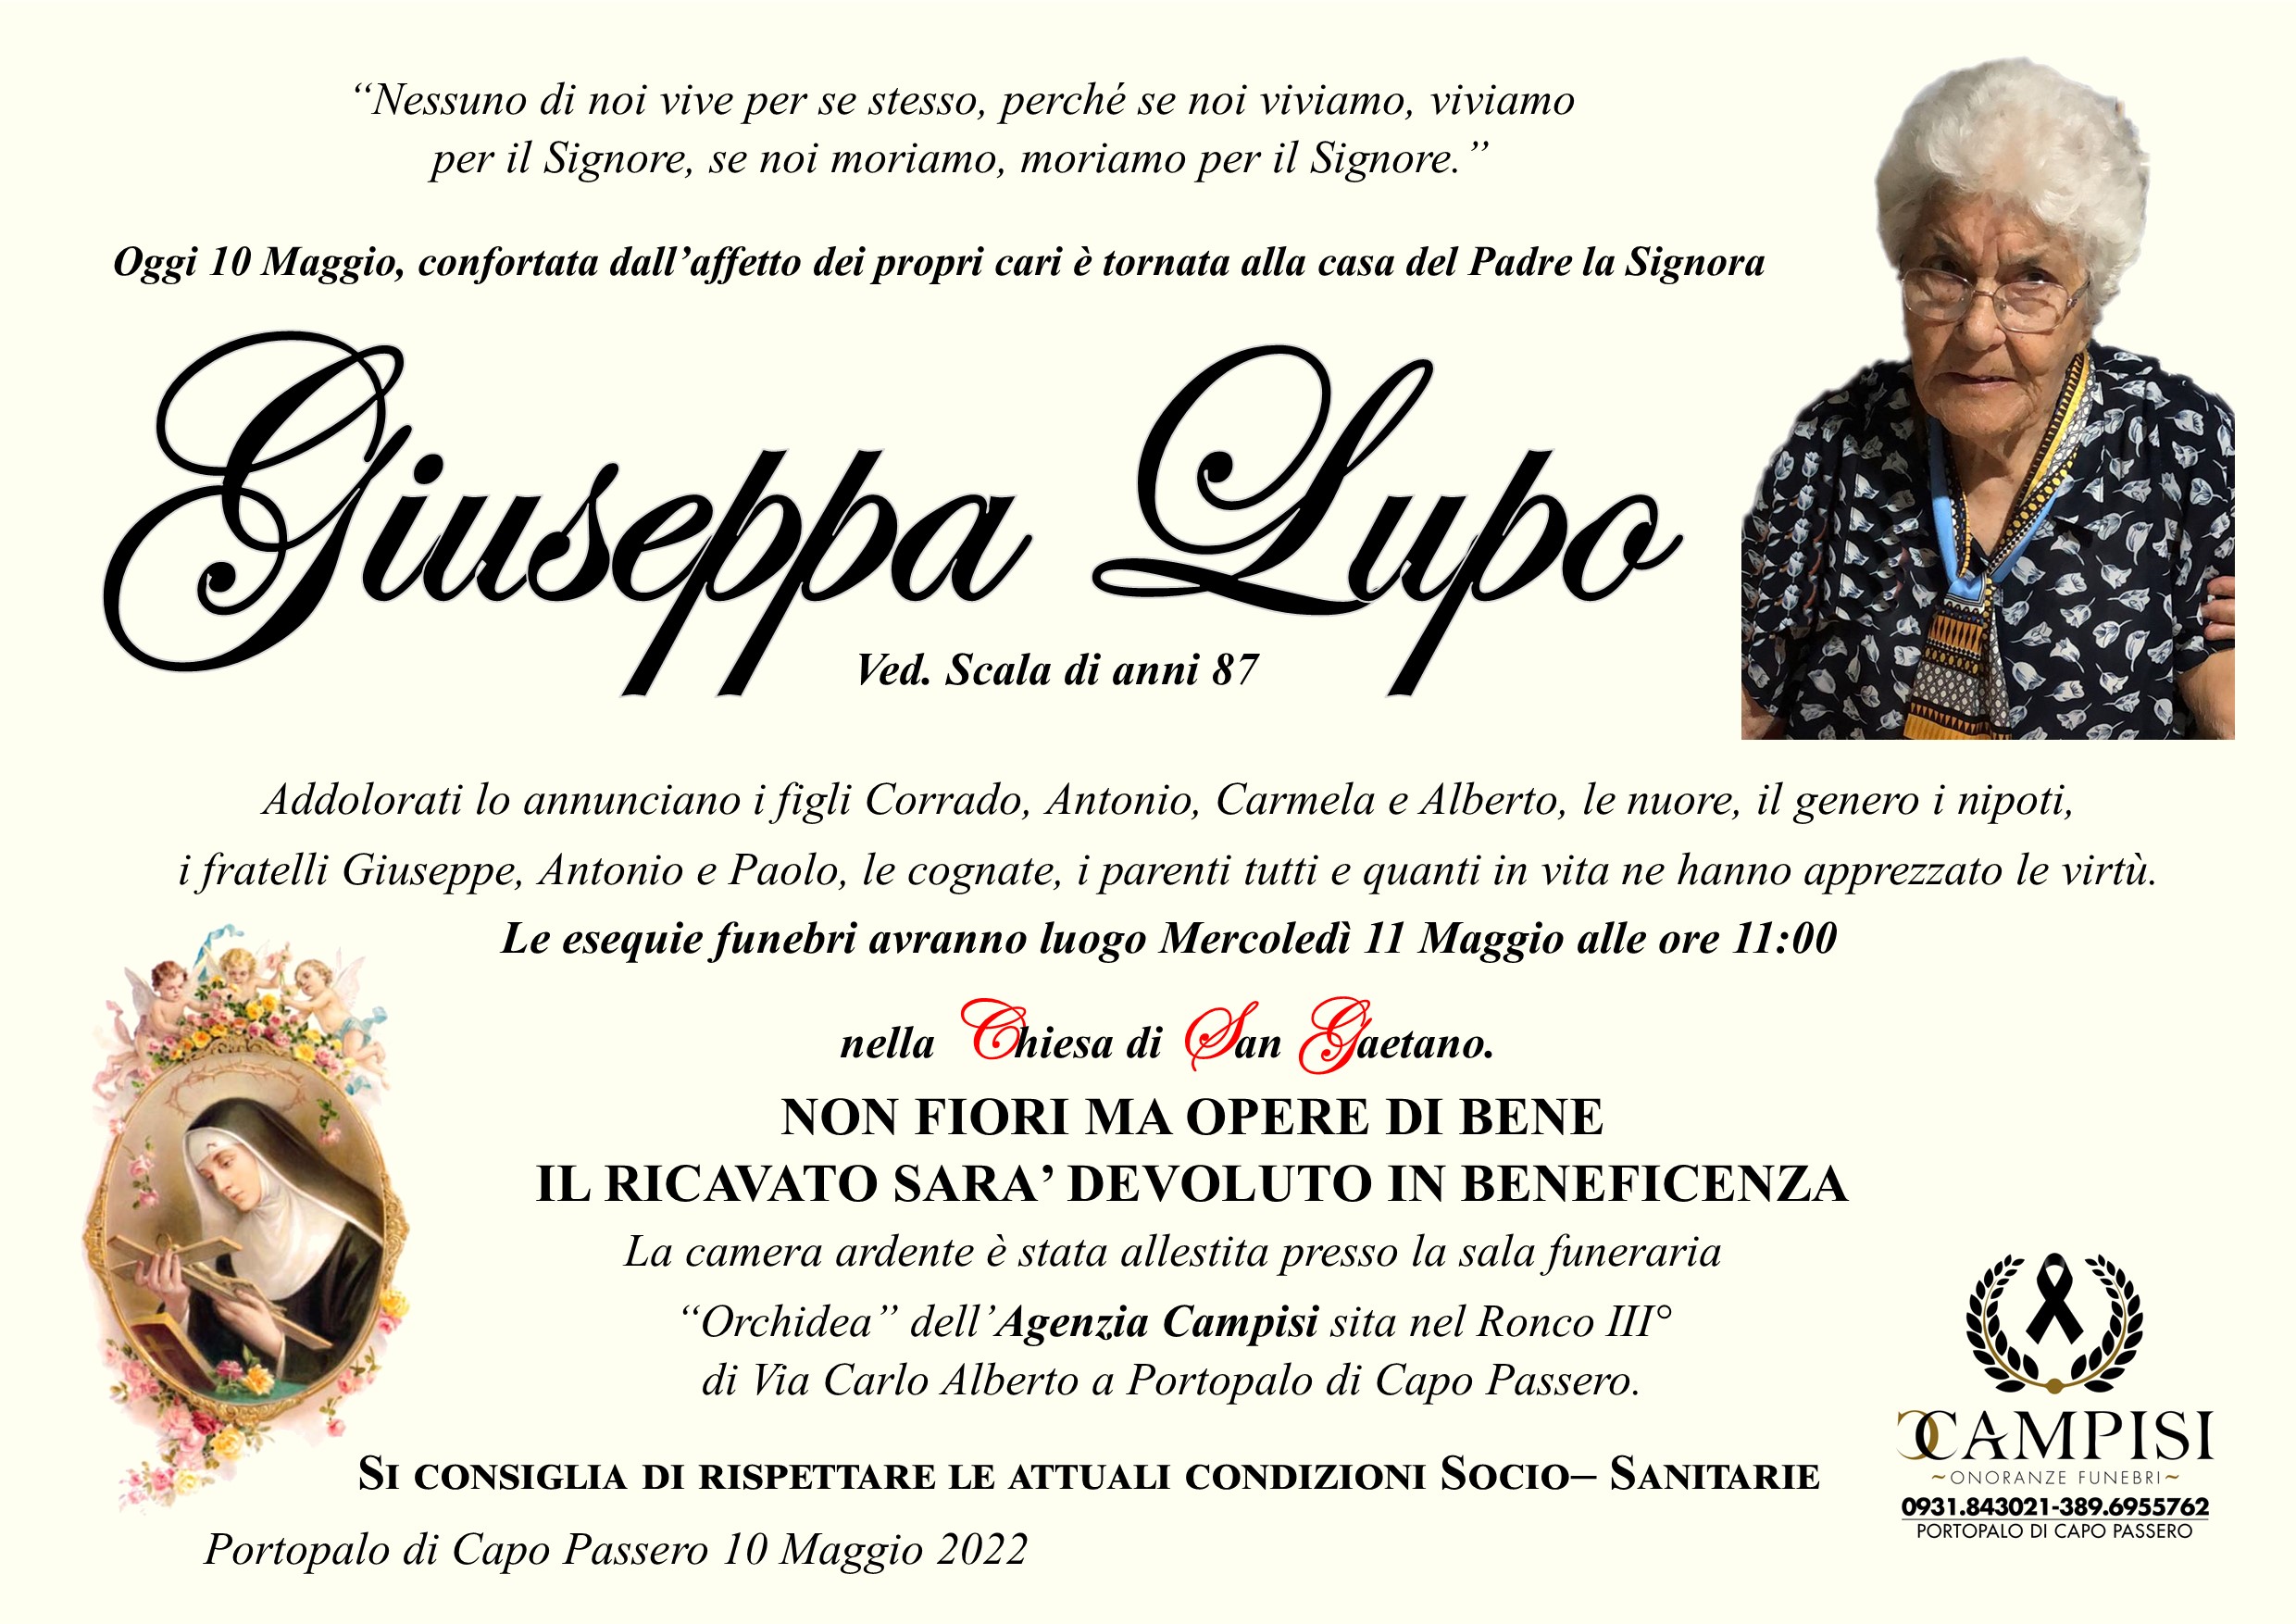 Giuseppa Lupo